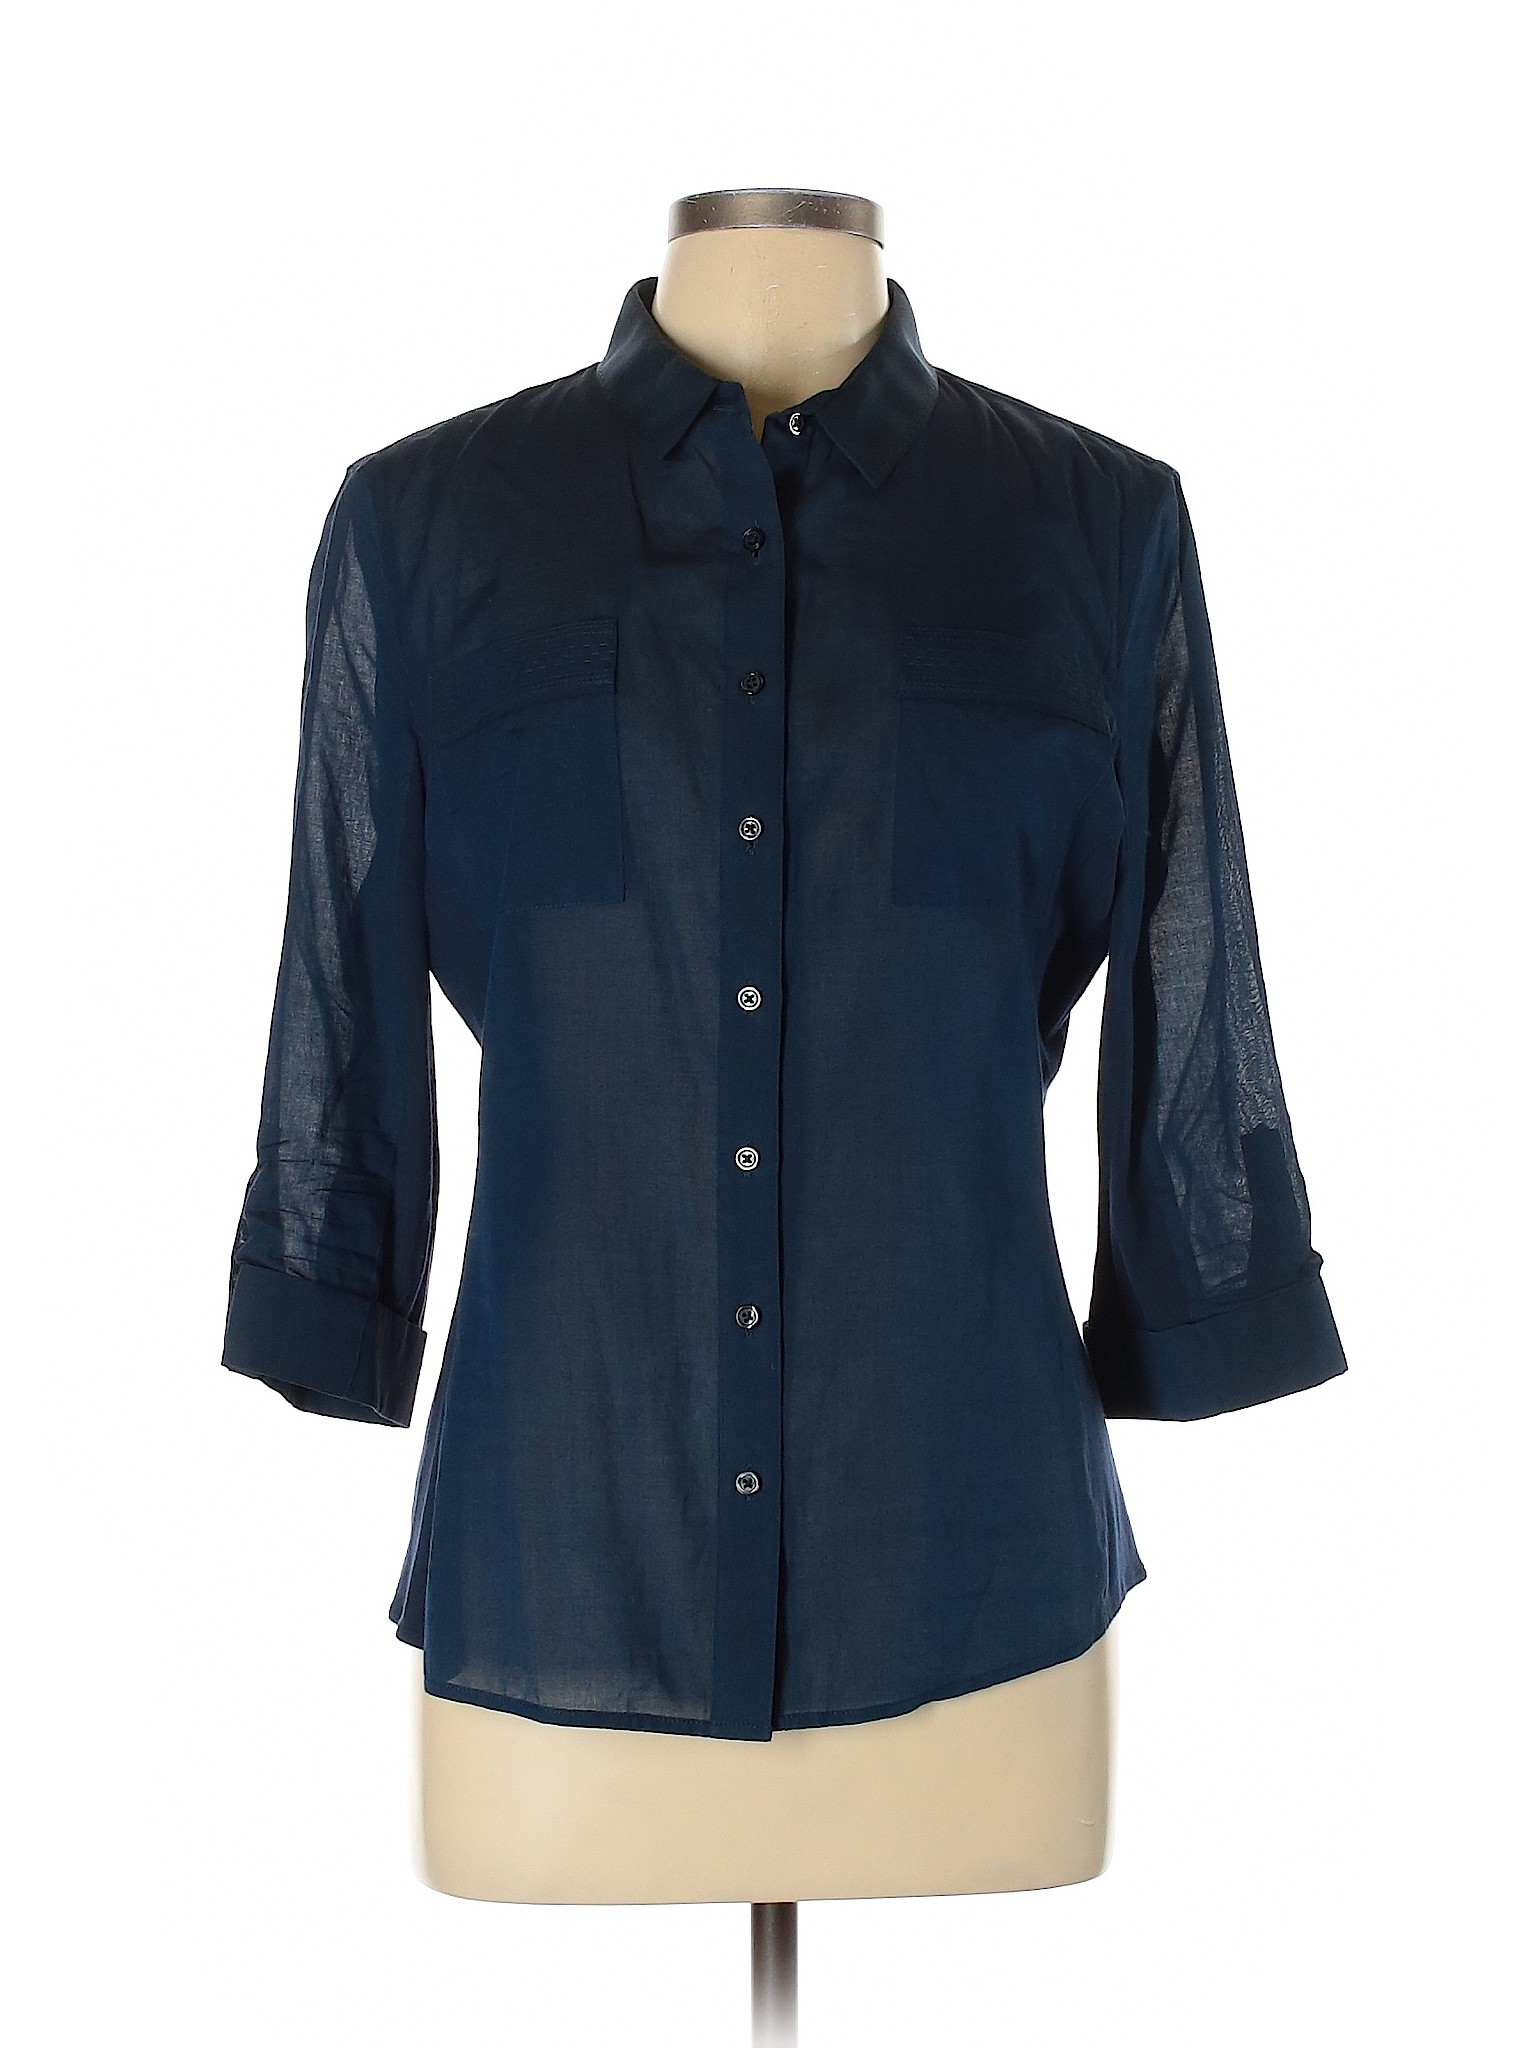 Elie Tahari Women Blue 3/4 Sleeve Button-Down Shirt L | eBay